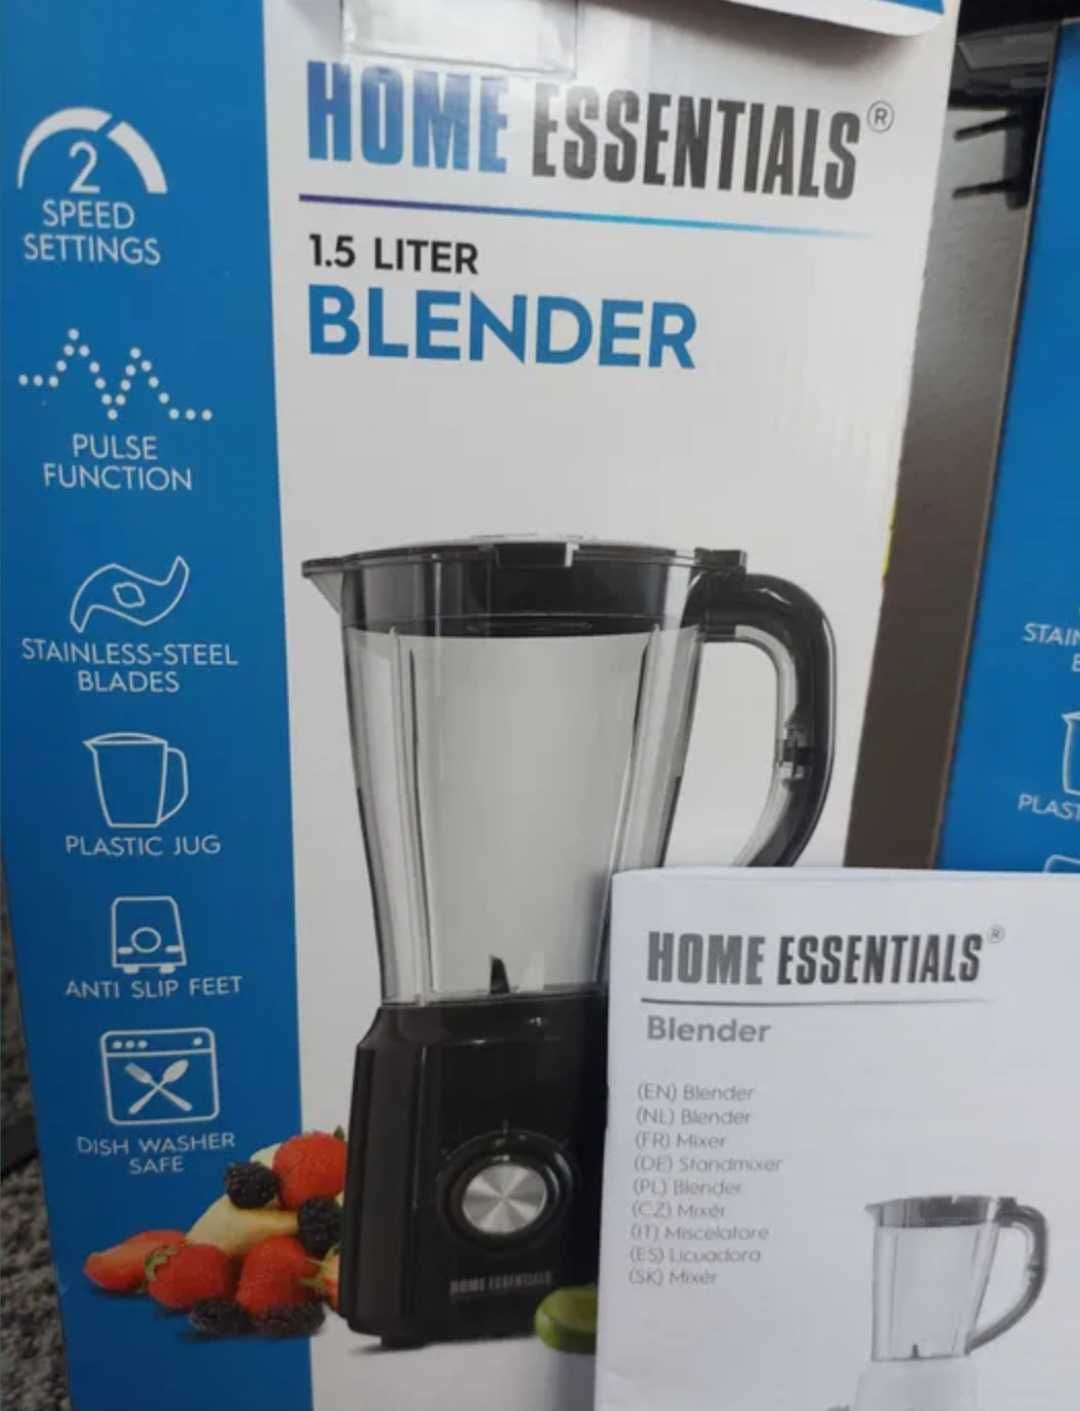 Blender home essentials